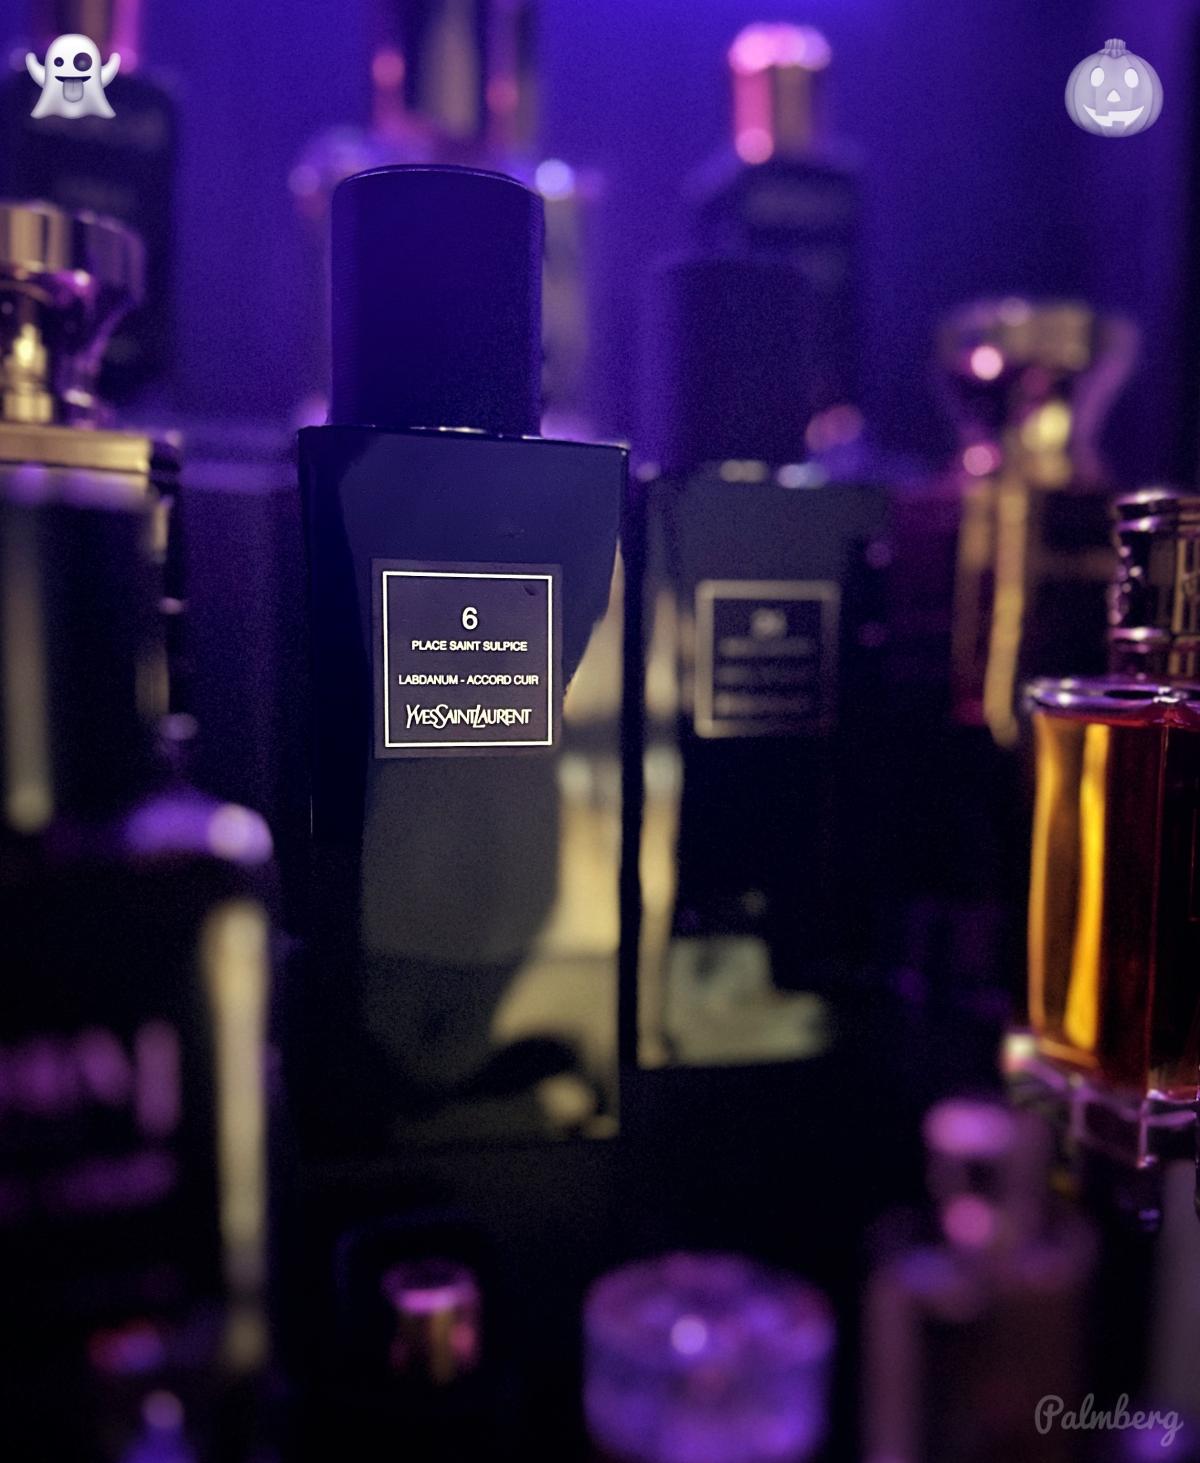 6 place Saint Sulpice Yves Saint Laurent perfume - a fragrance for ...